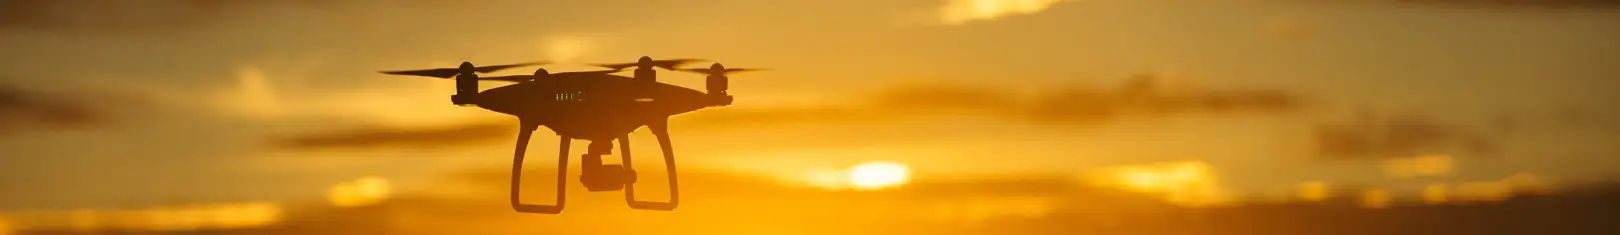 drone i solnedgang